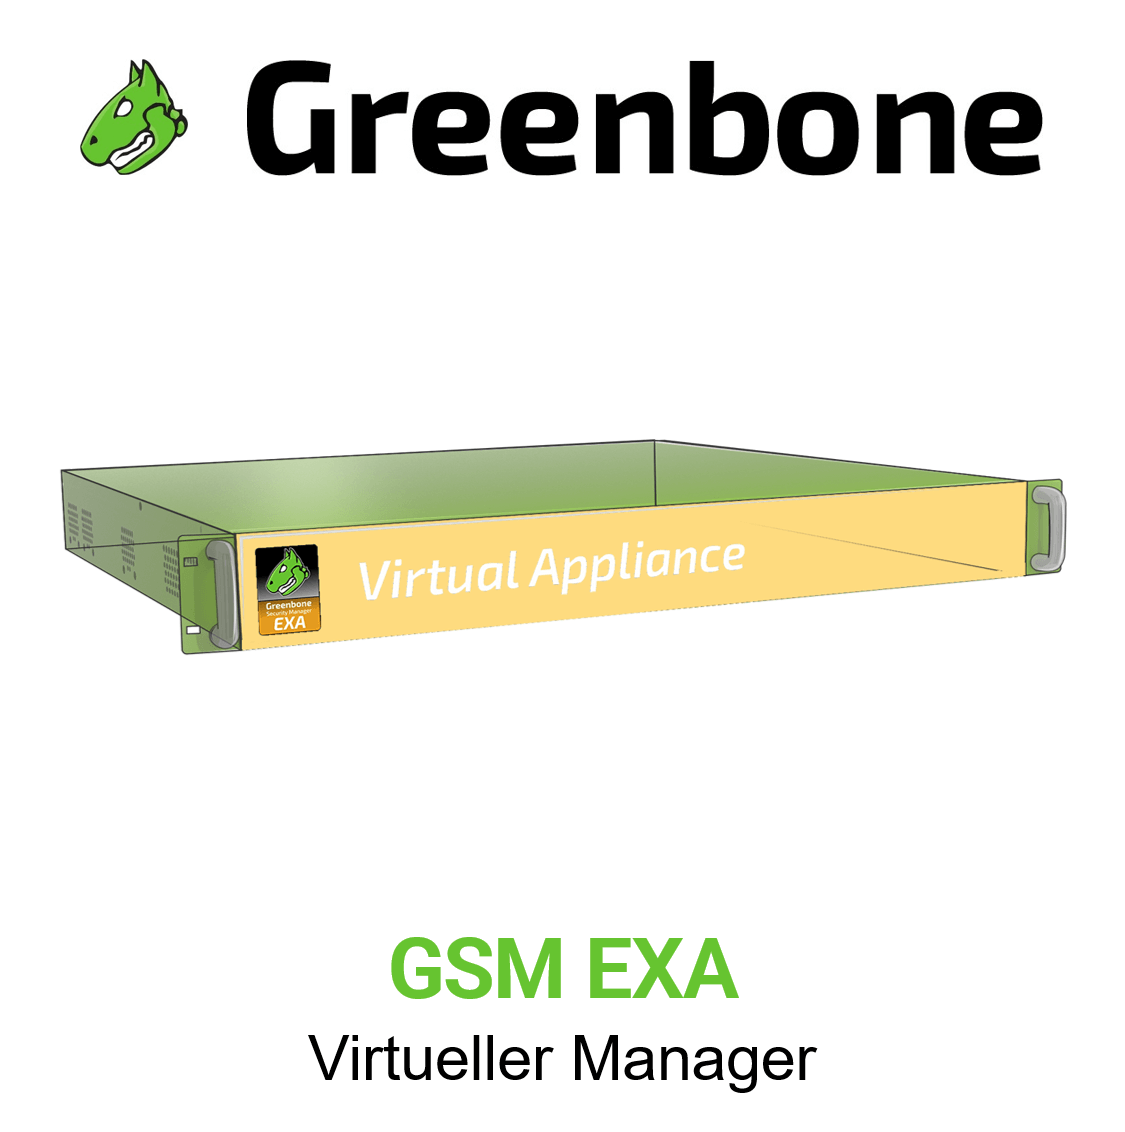 Greenbone Enterprise GSM EXA Virtuelle Appliance